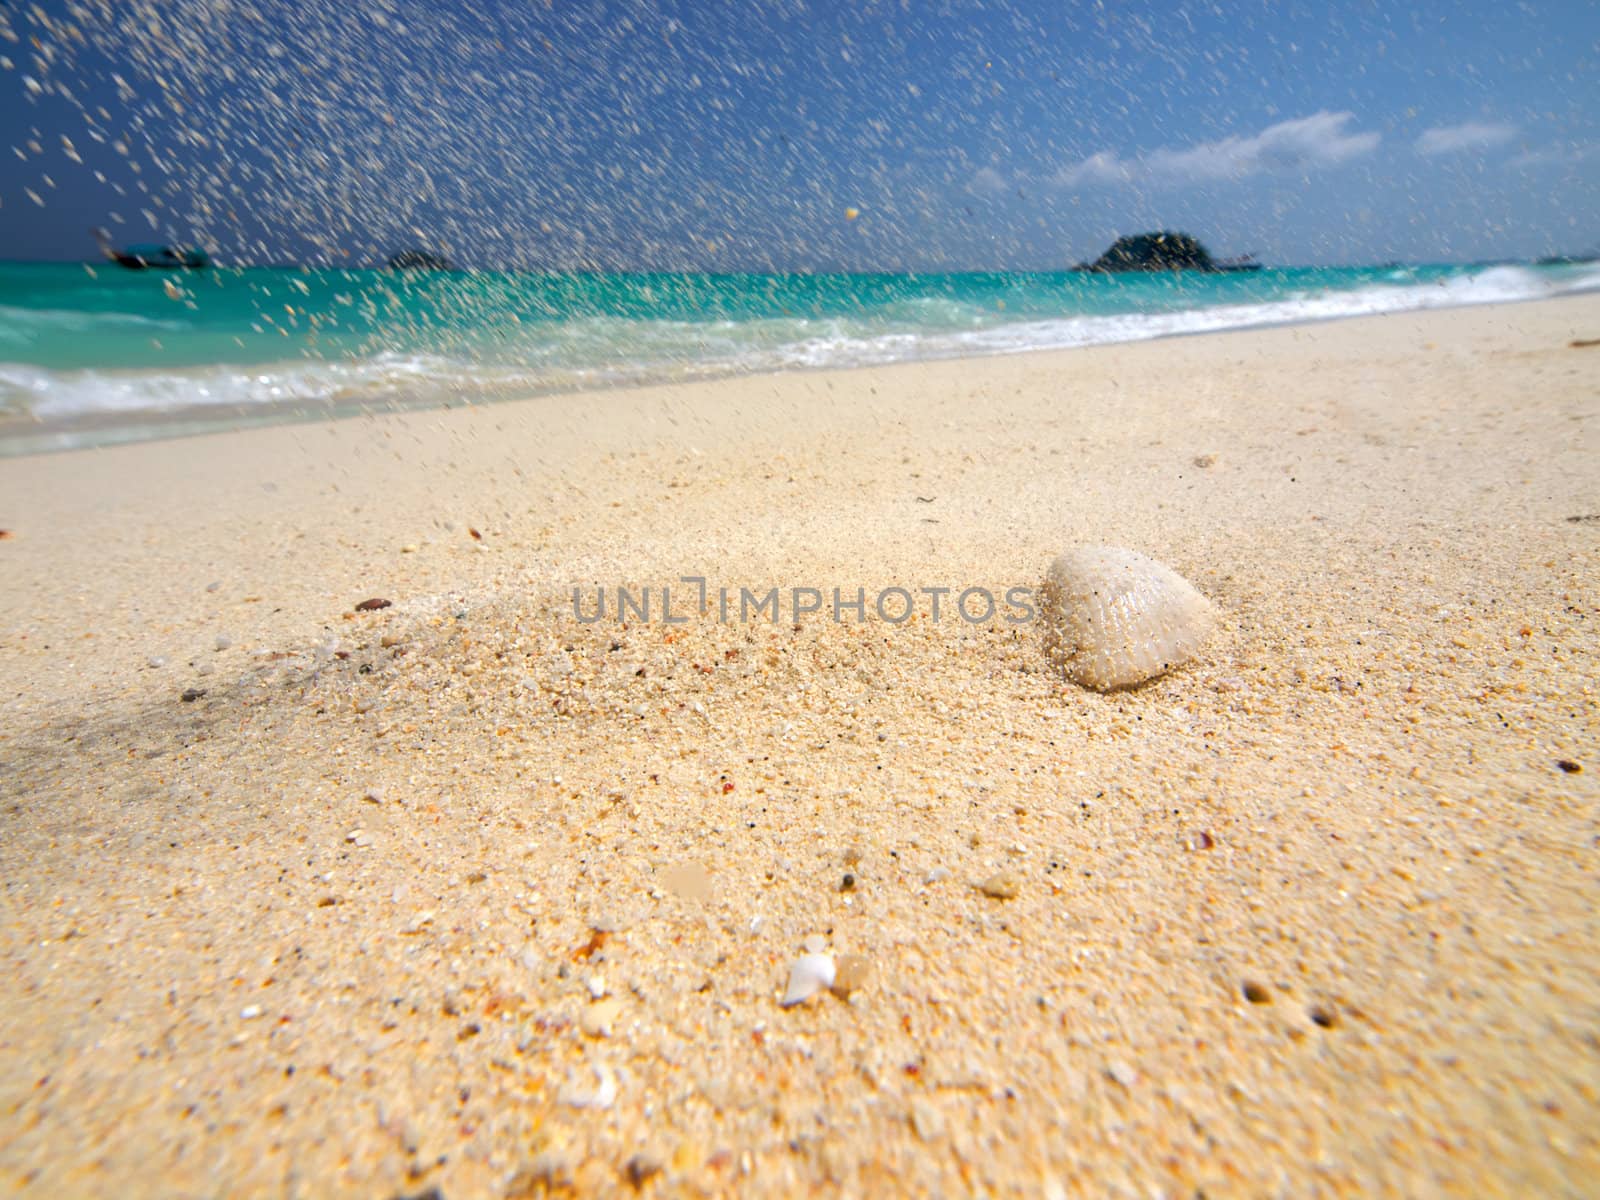 White sand falling down on a shell on sea beach. Wide angle shot